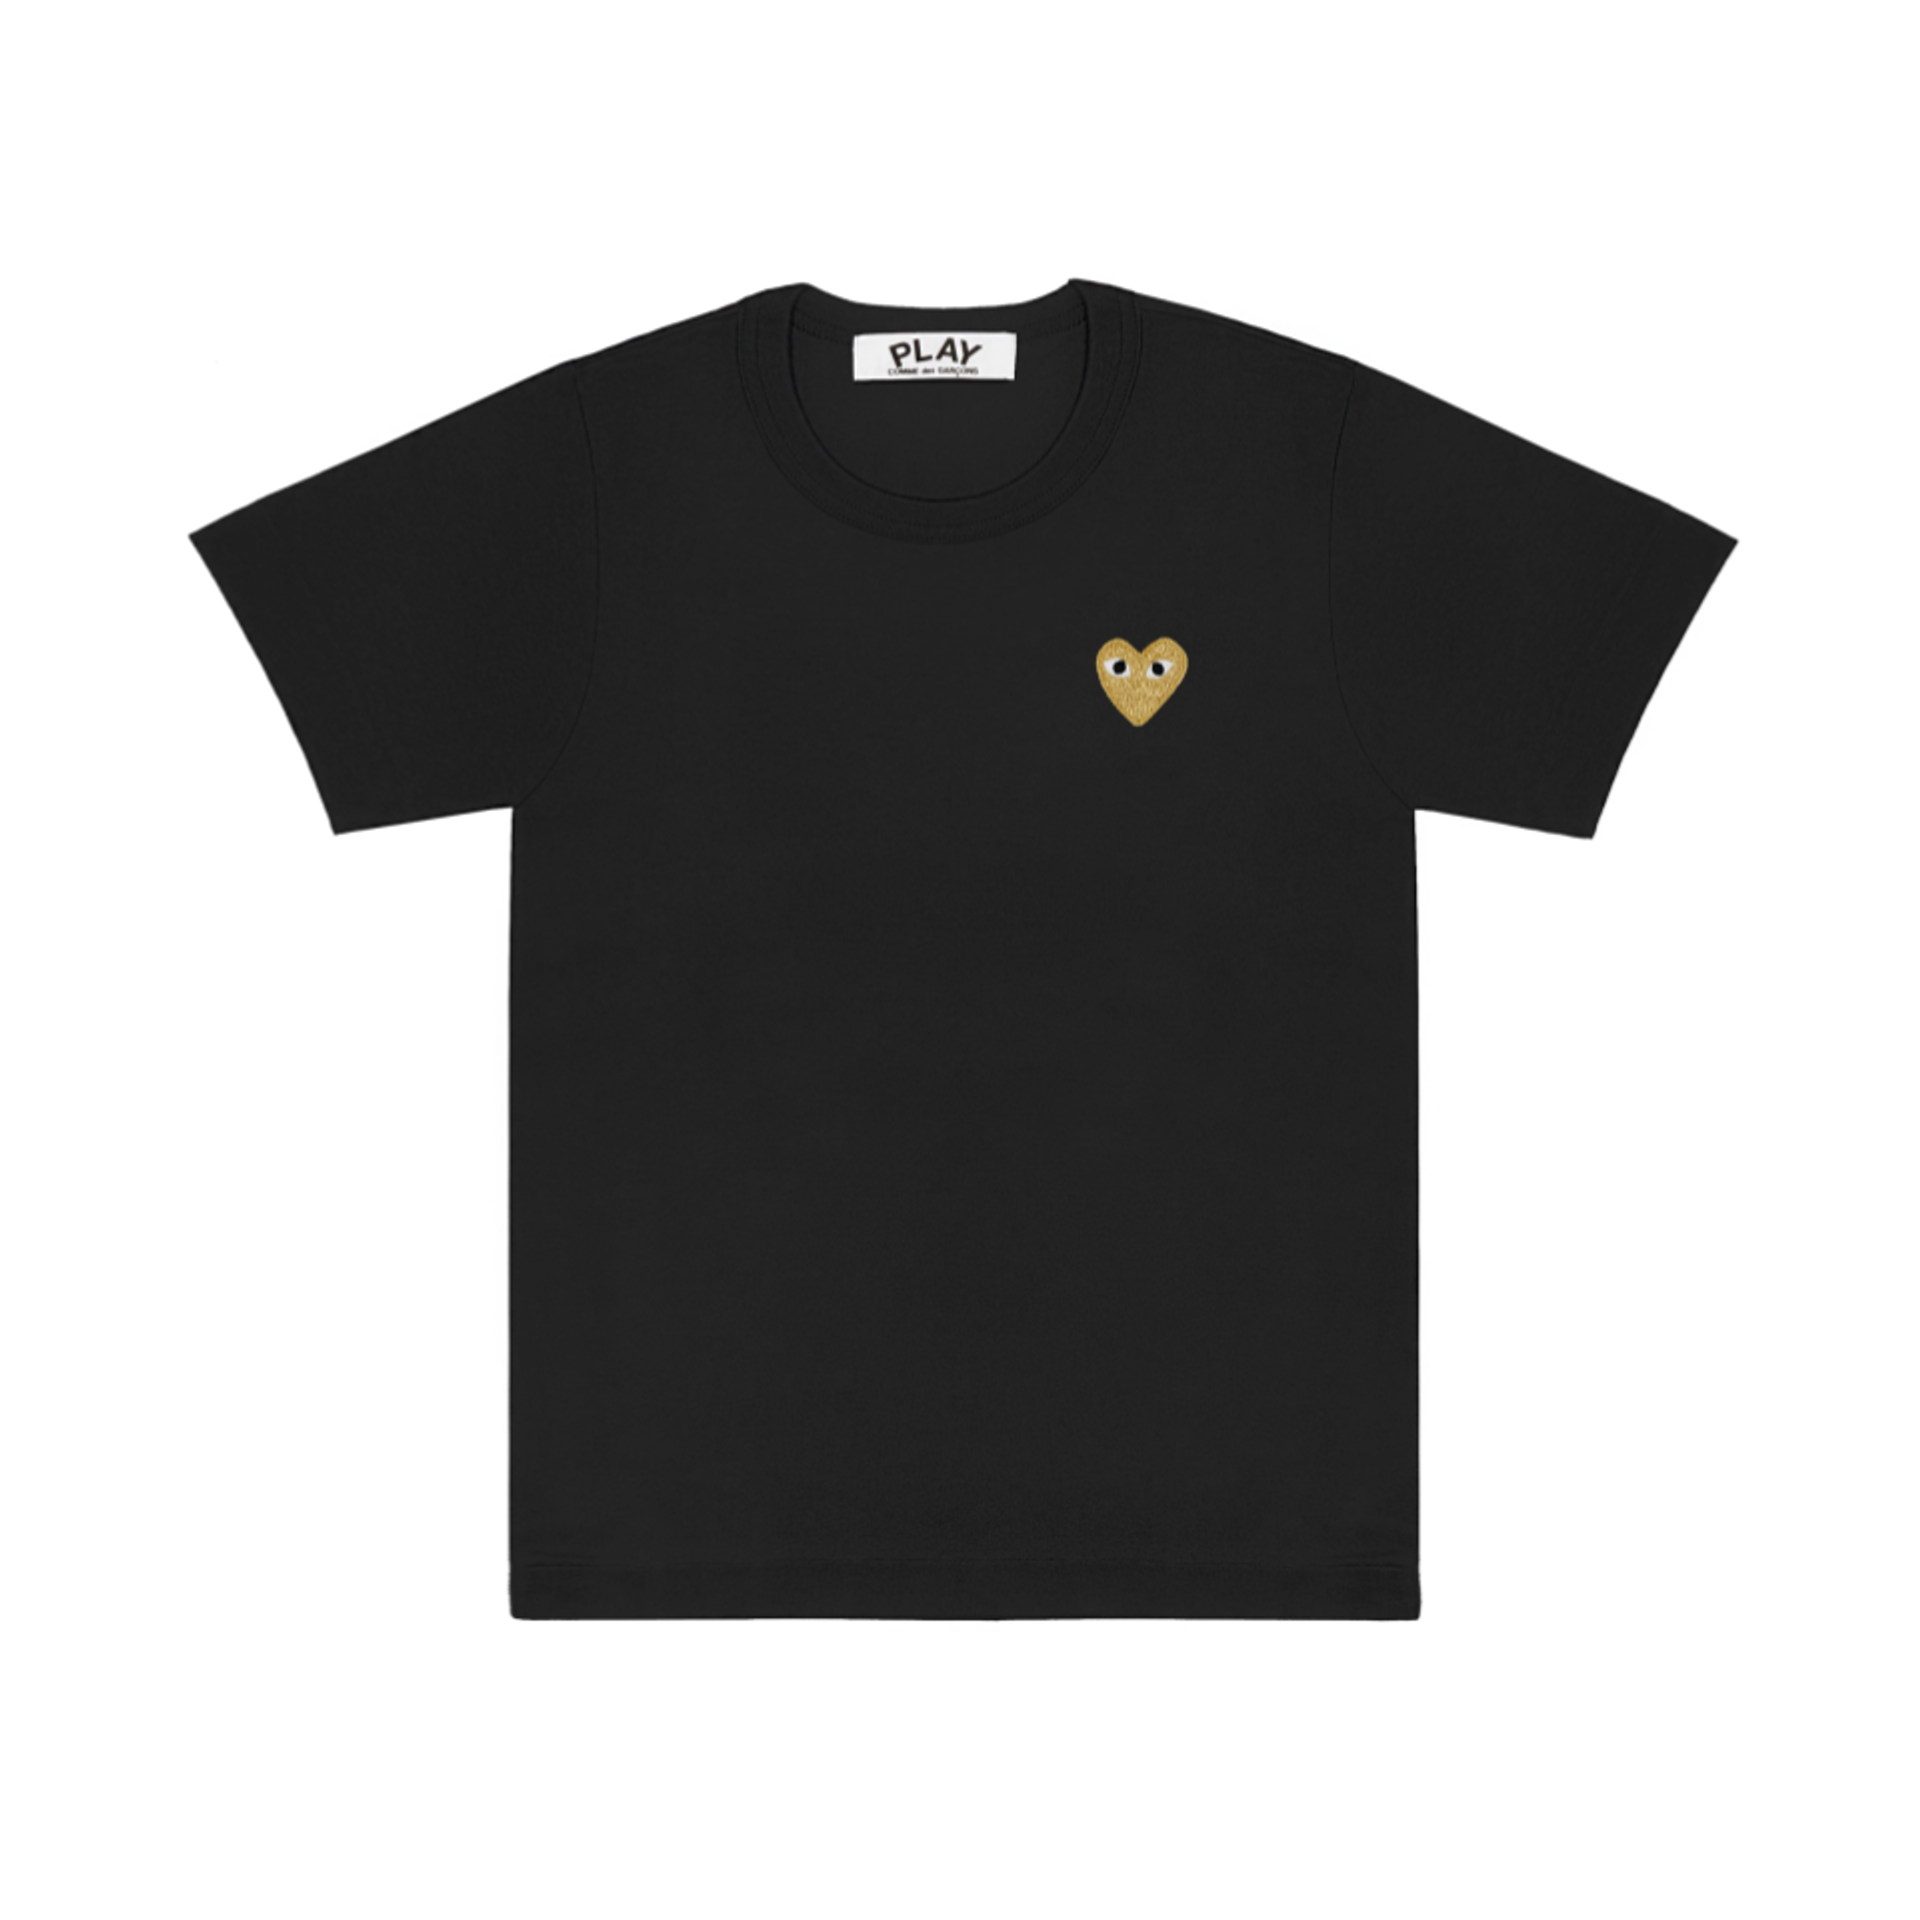 PLAY Gold Heart T-Shirt Black Ladies'